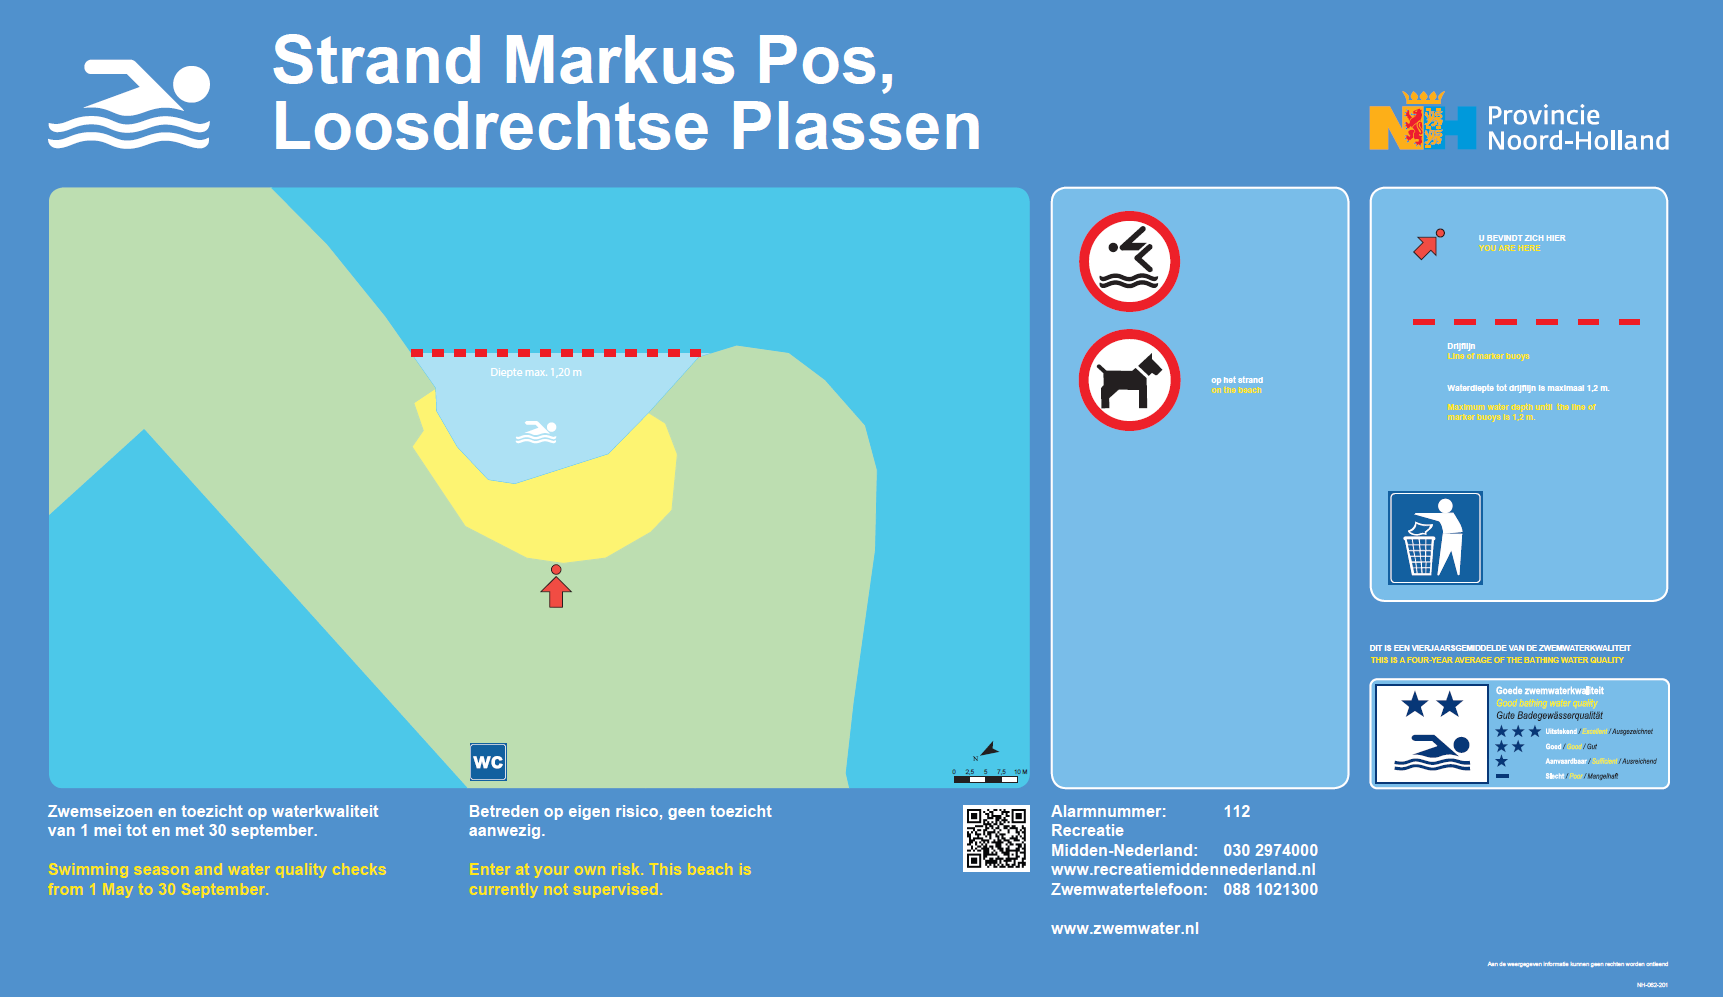 The information board at the swimming location Strand Markus Pos, Loosdrechtse Plassen